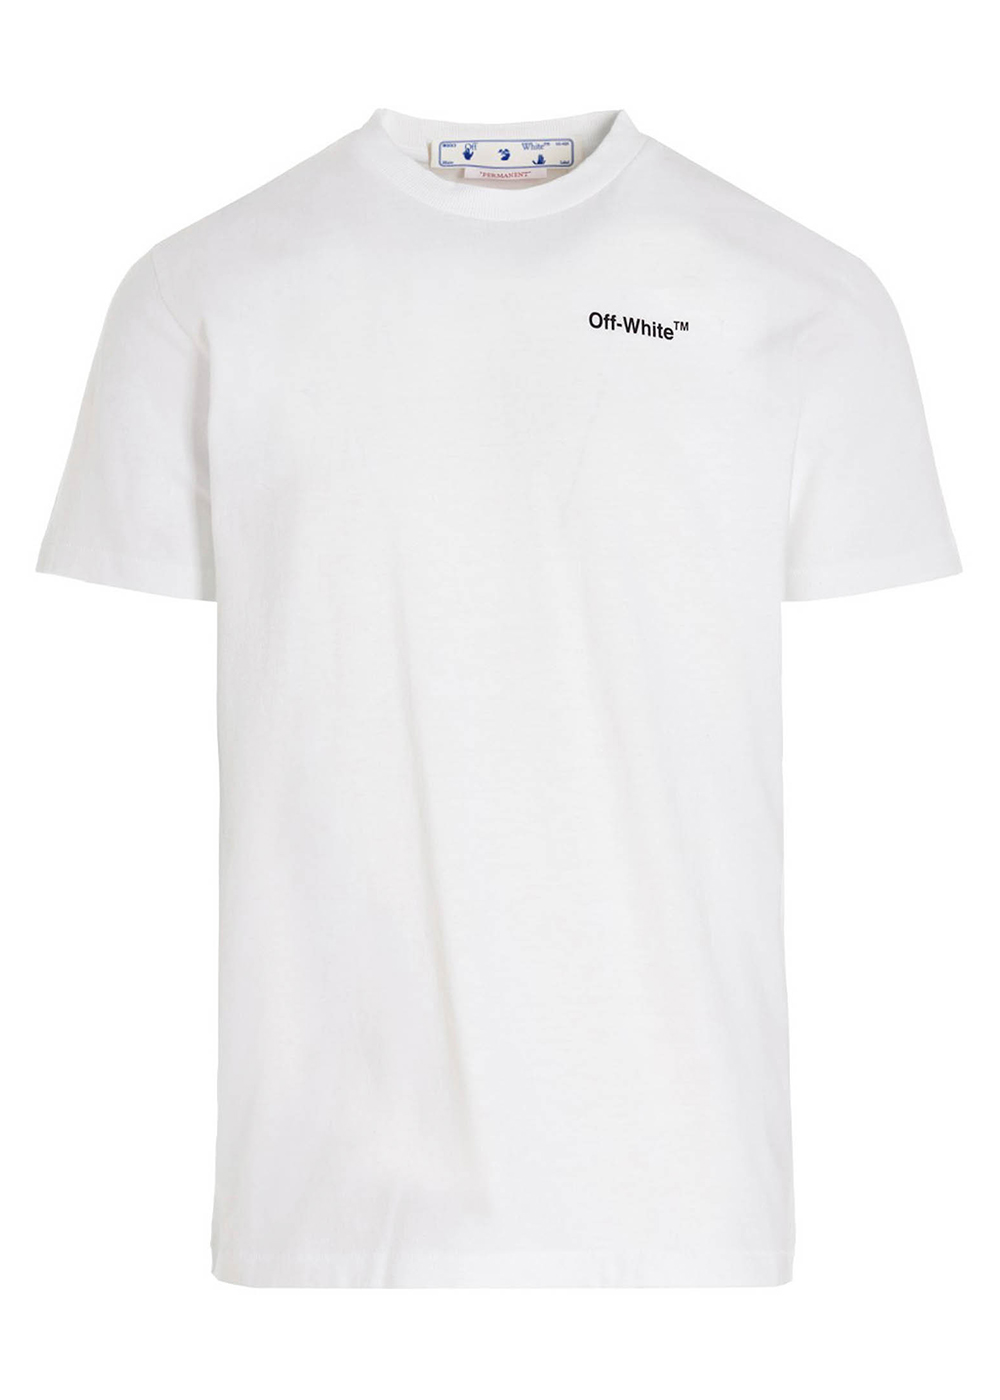 OFF-WHITE Text Logo Caravaggio Saint Jerome Writing Arrows Slim Fit T-Shirt  White/Black